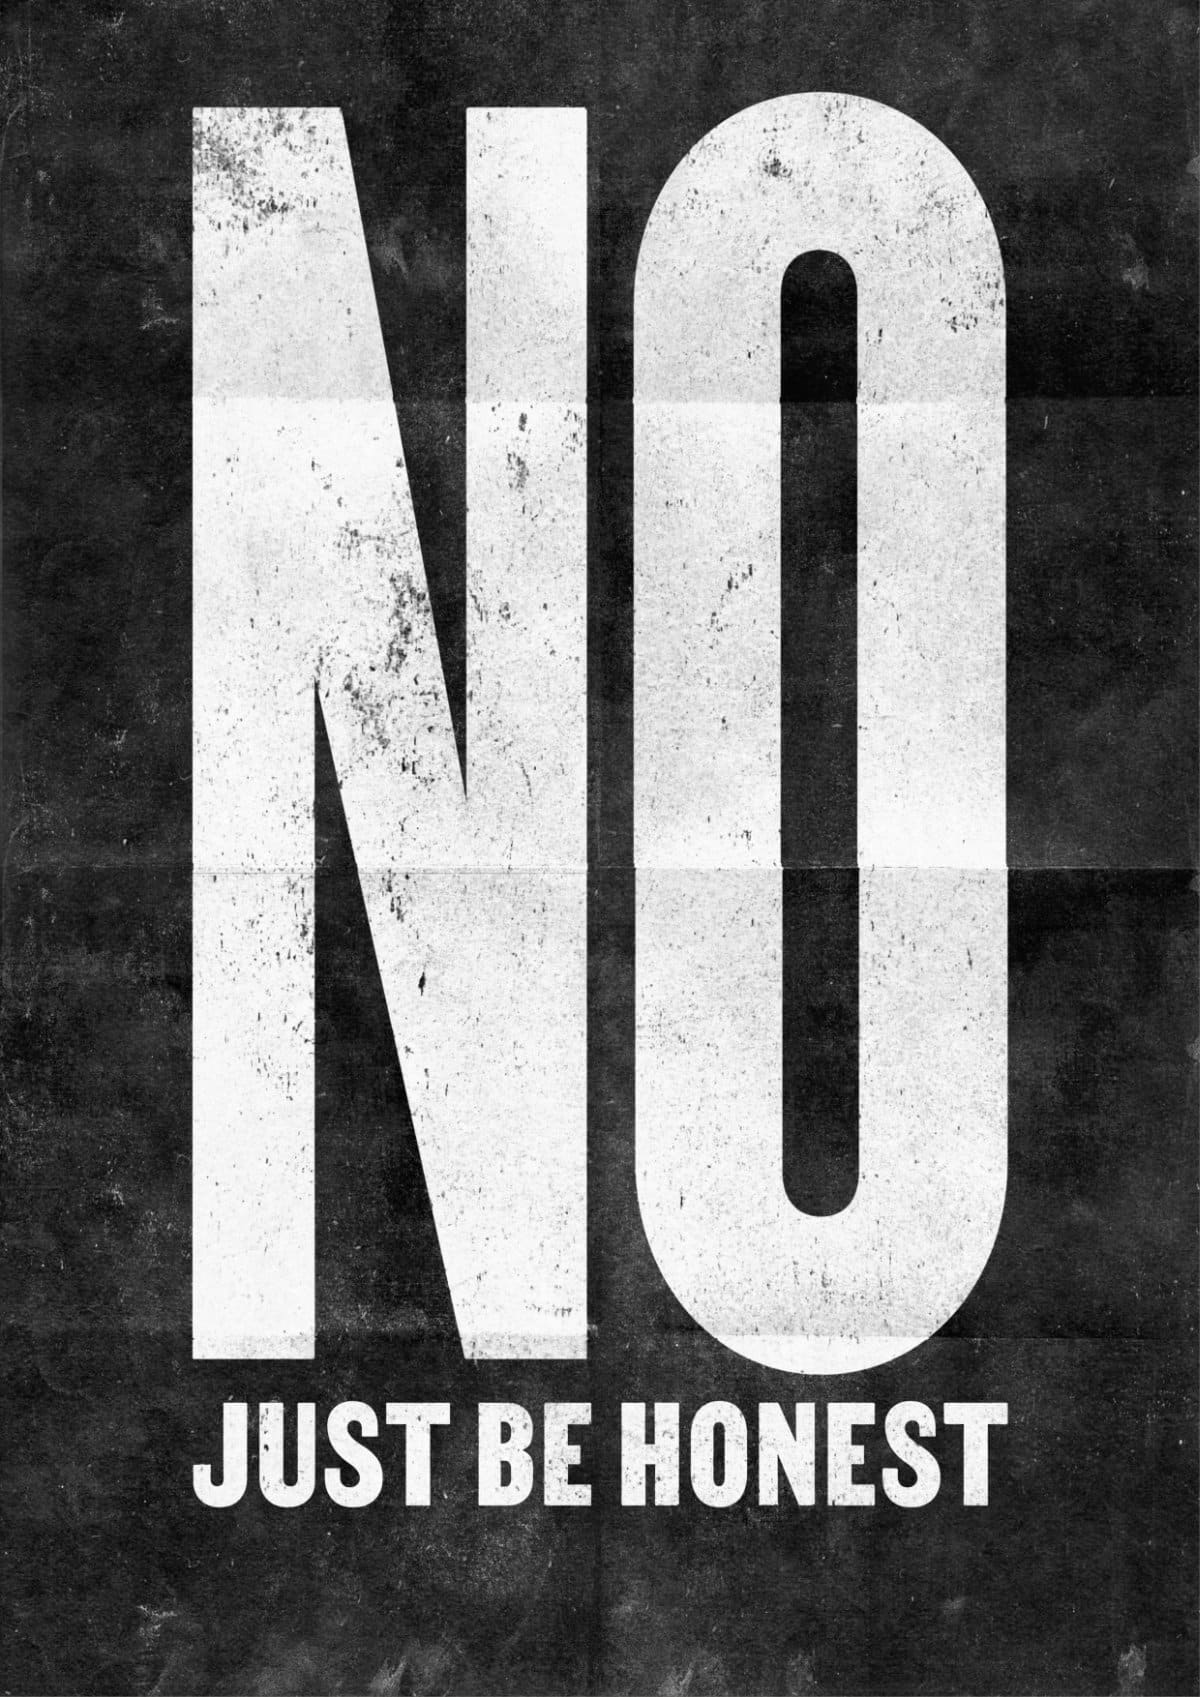 No just be honest – Poster Michael Leonhartsberger